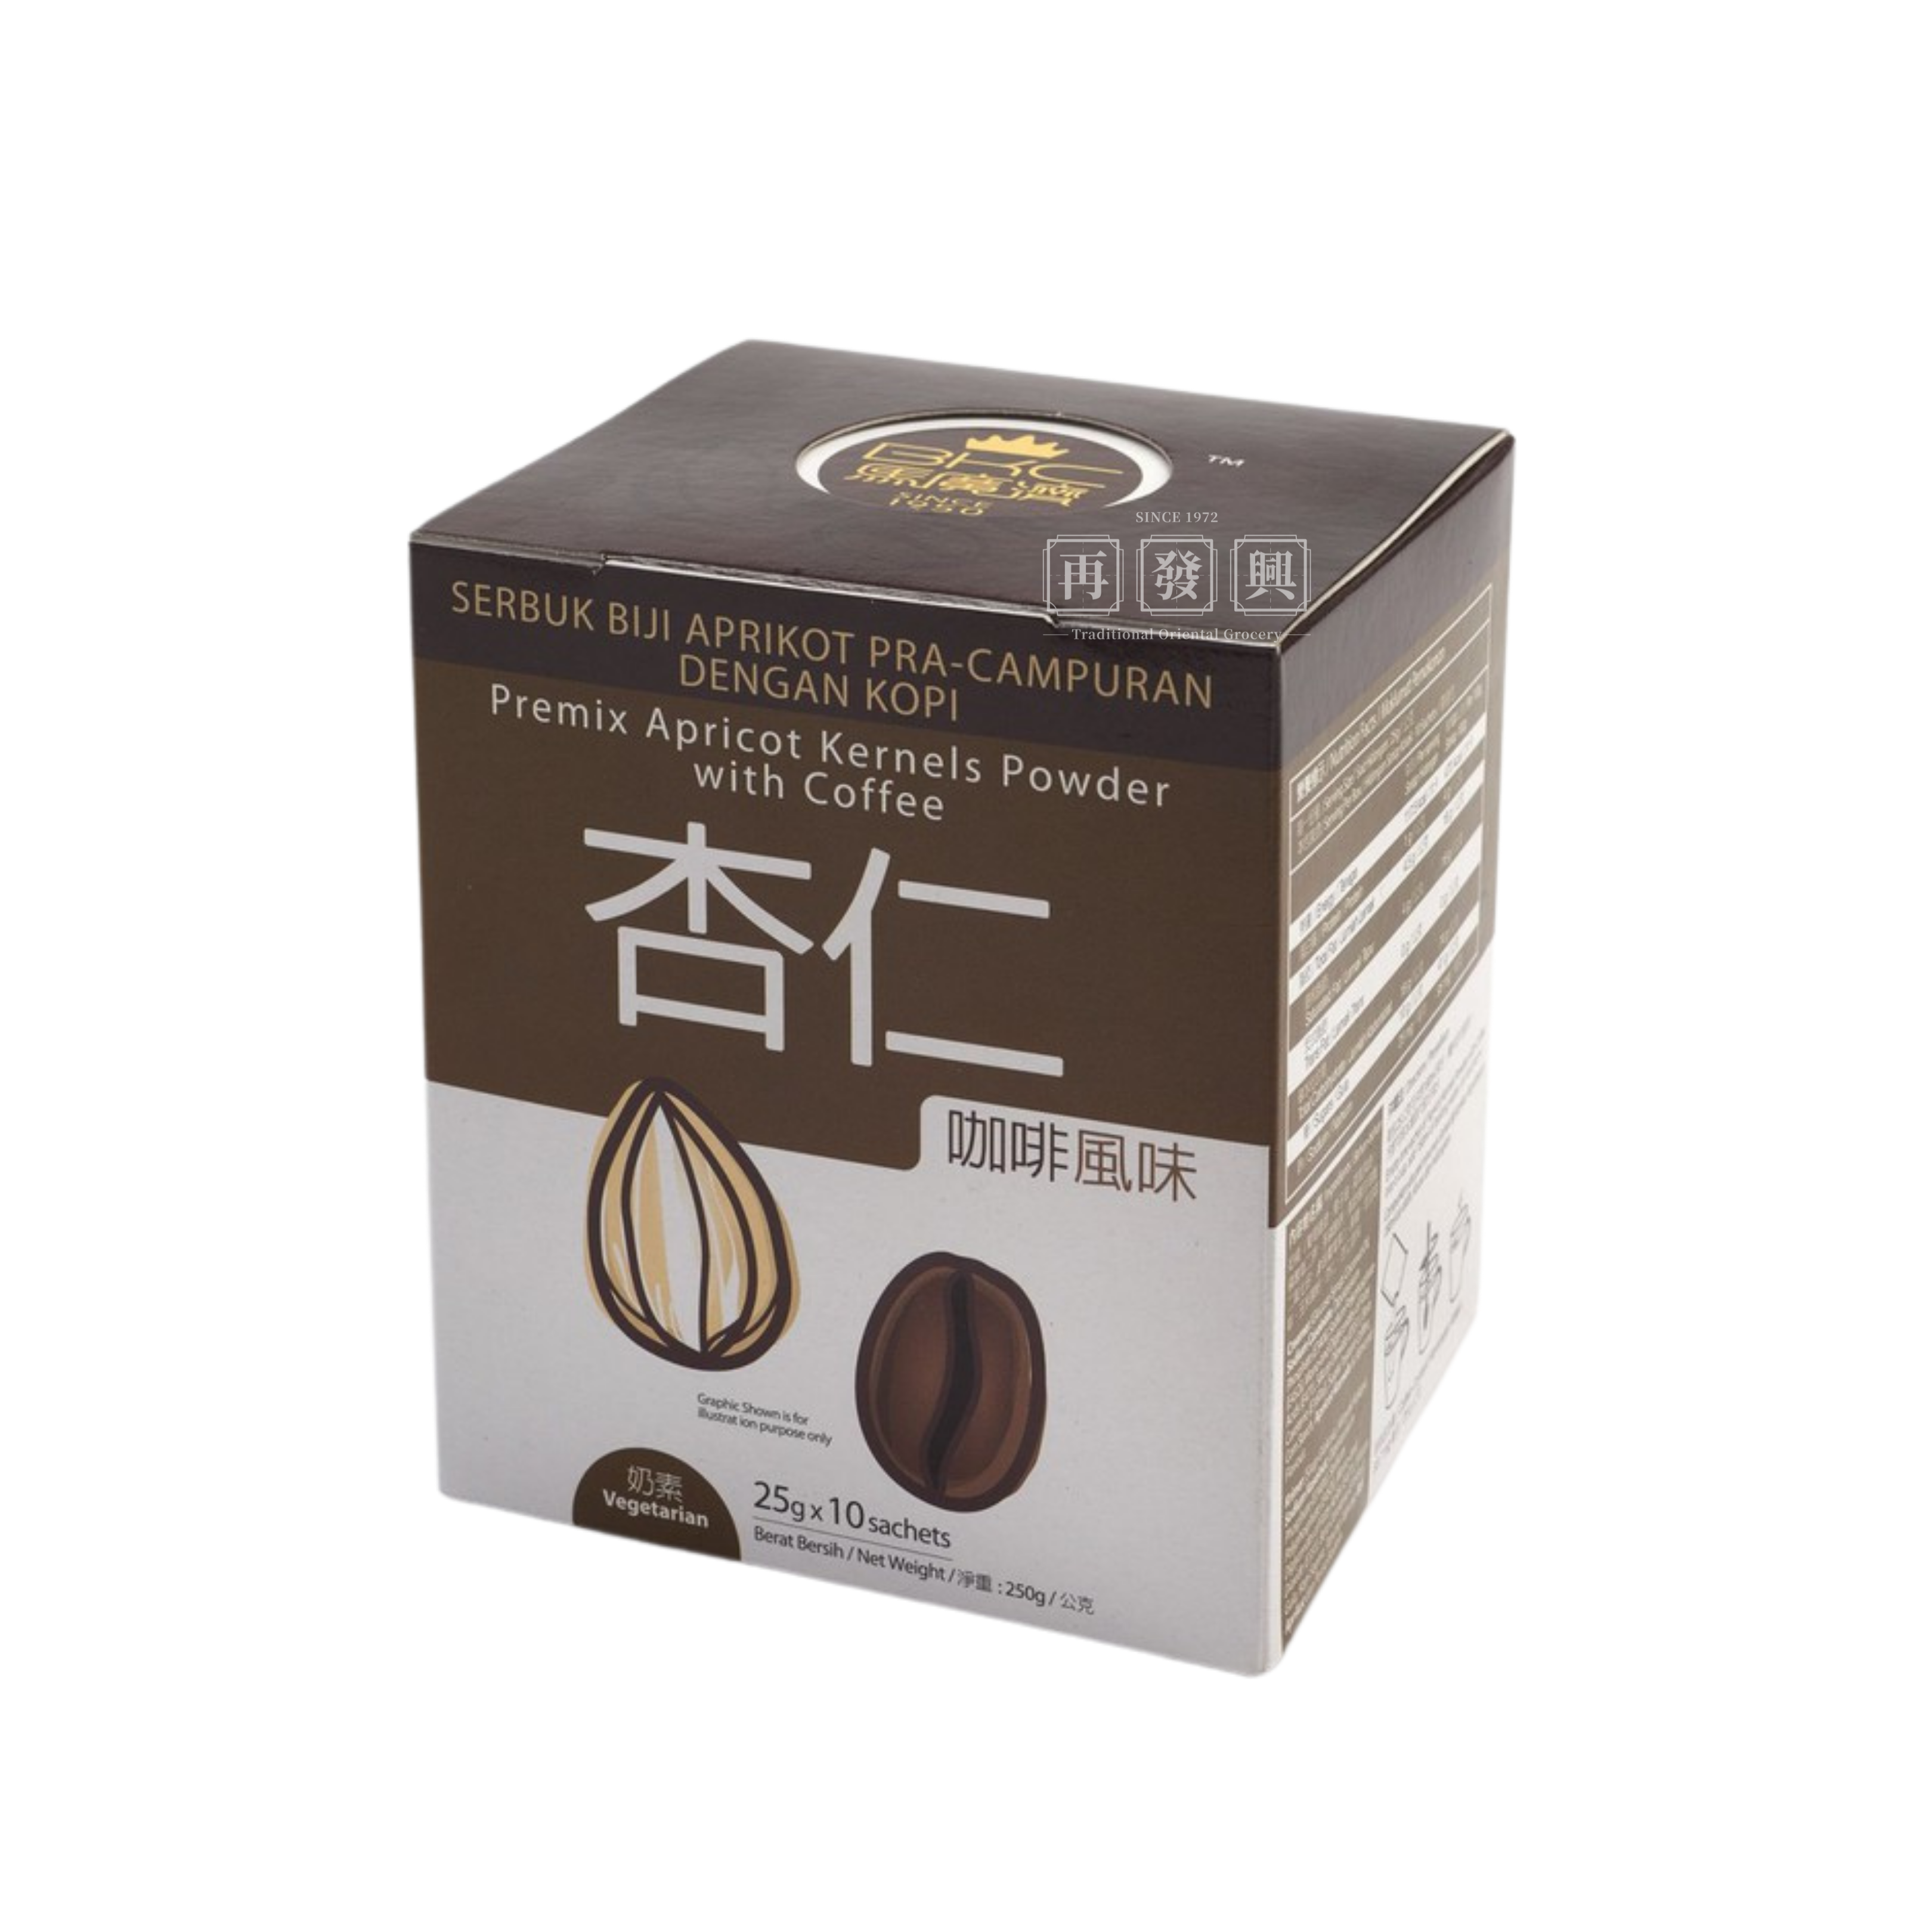 BKC Premix Apricot Kernels Powder with Coffee 250g